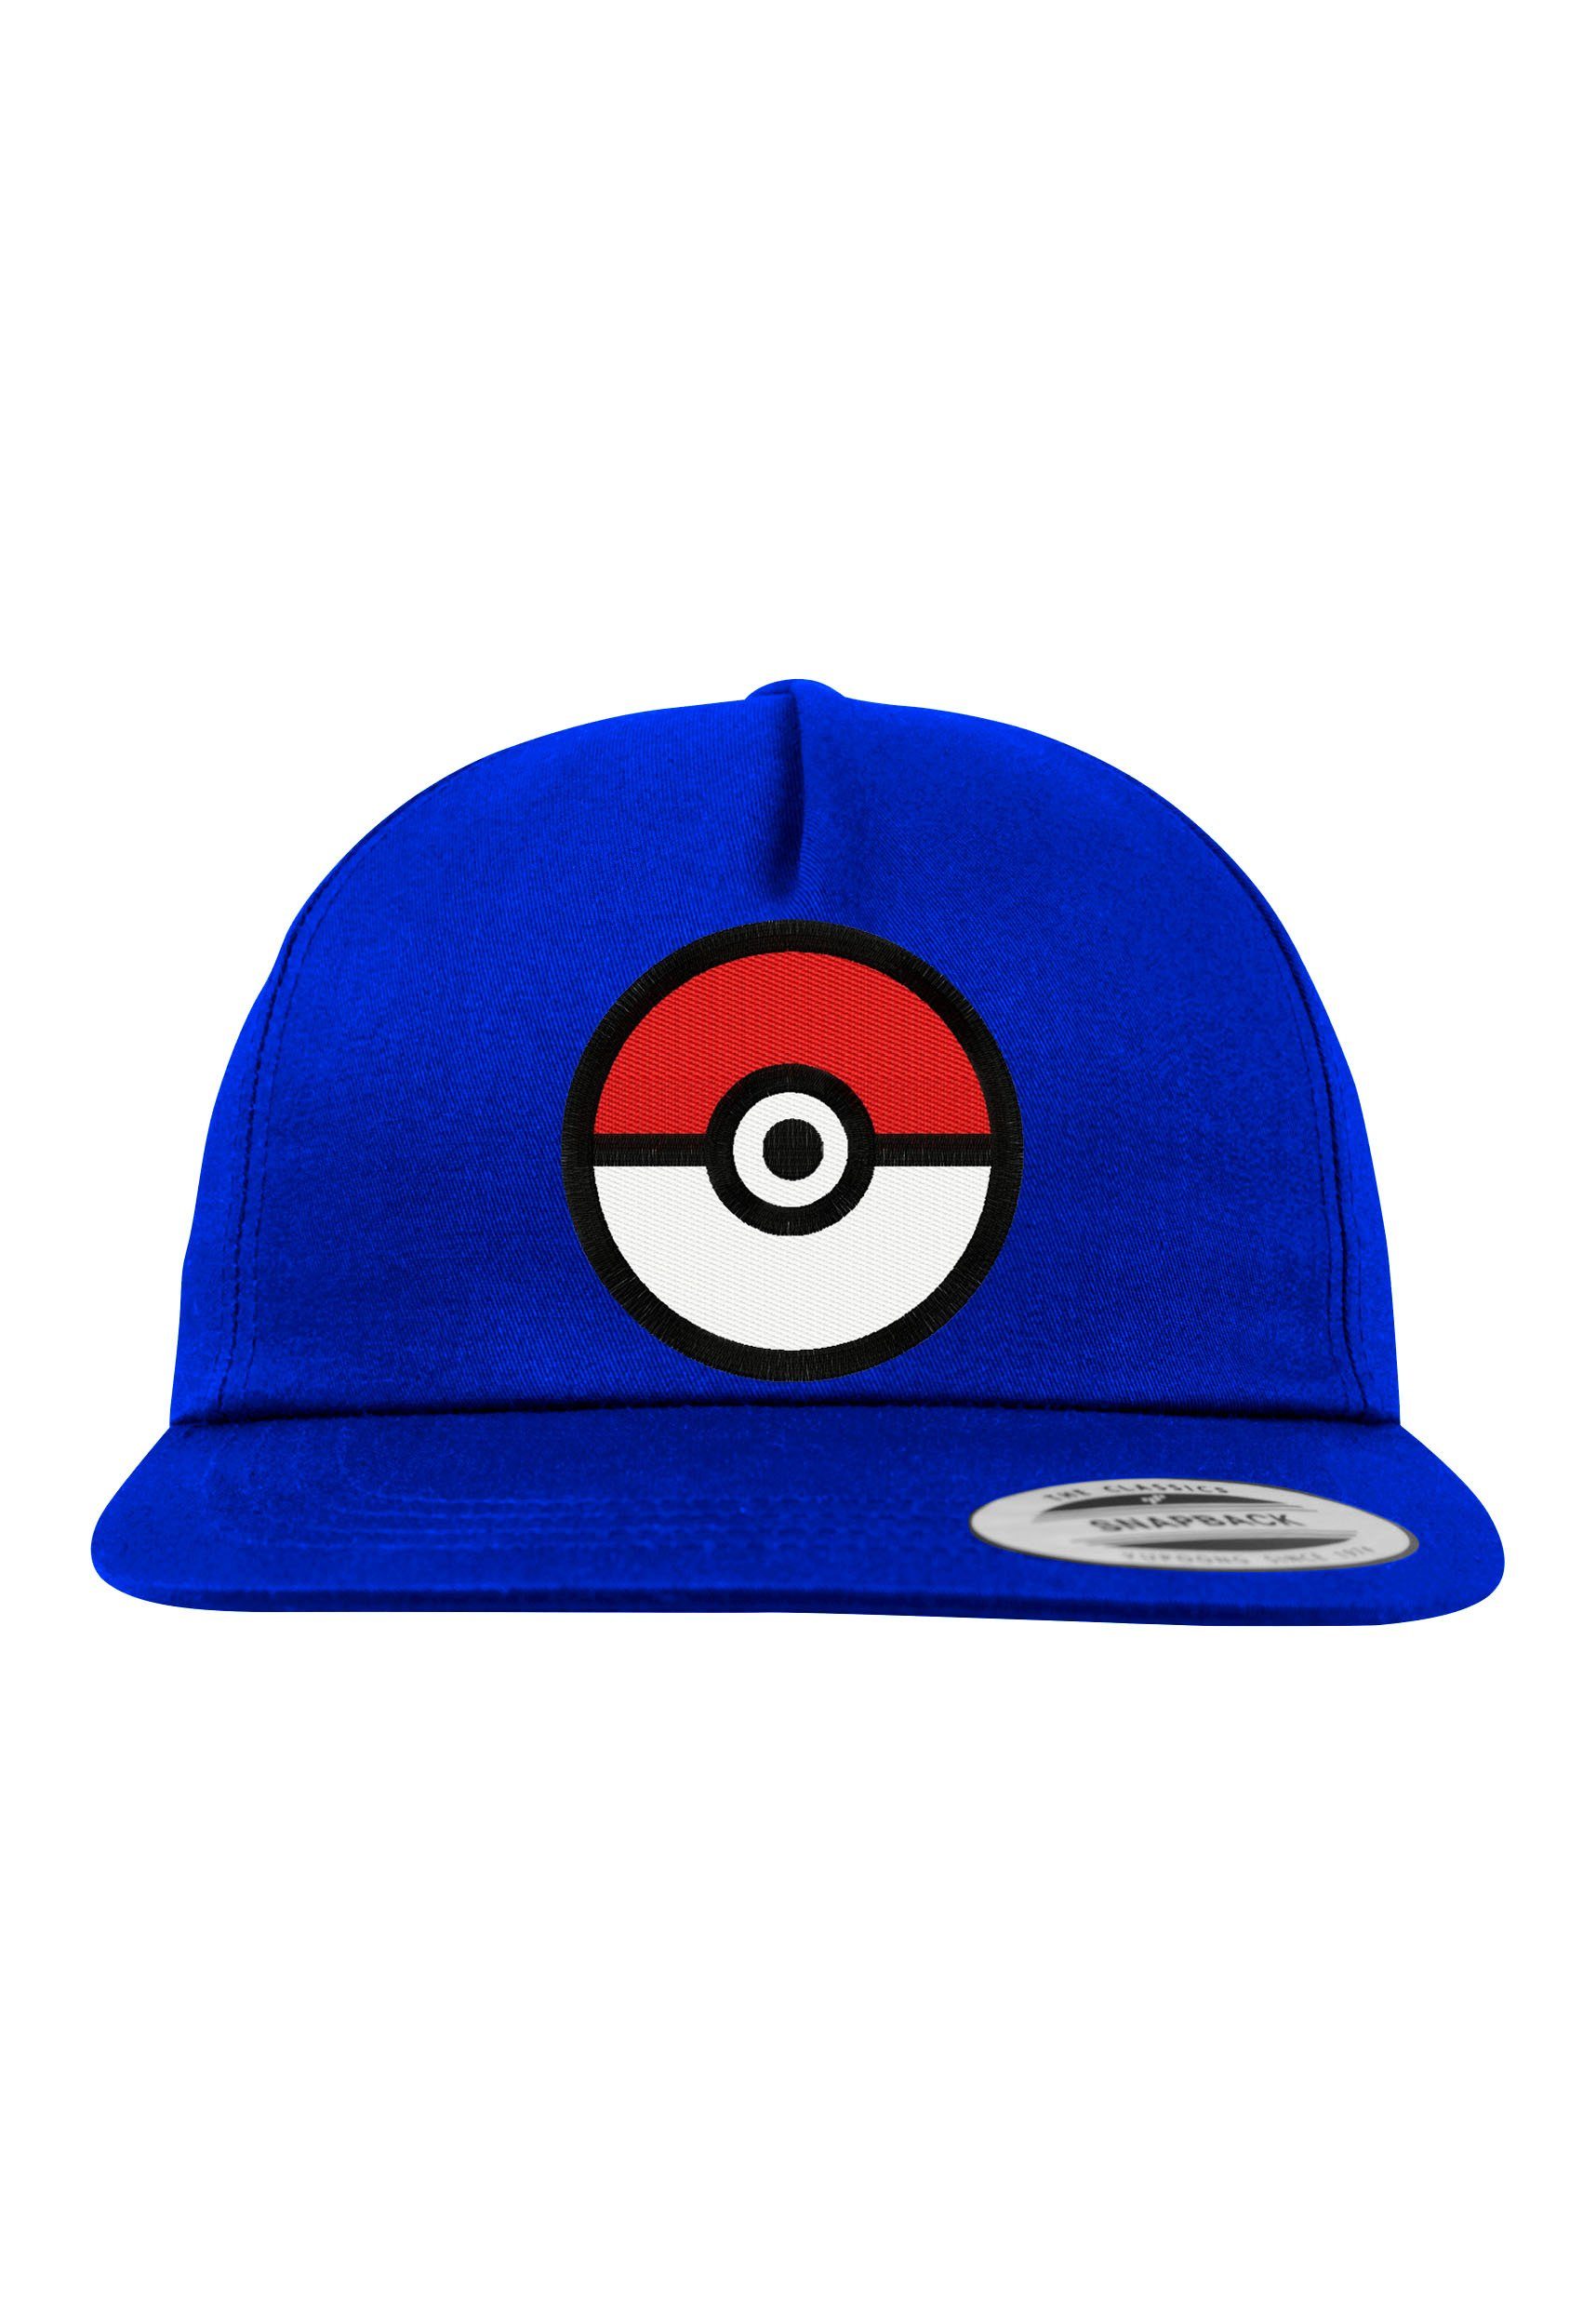 Youth Designz Baseball Cap Cap Kinder mit Logo modischer Ball 2D Poke Stickerei Royalblau